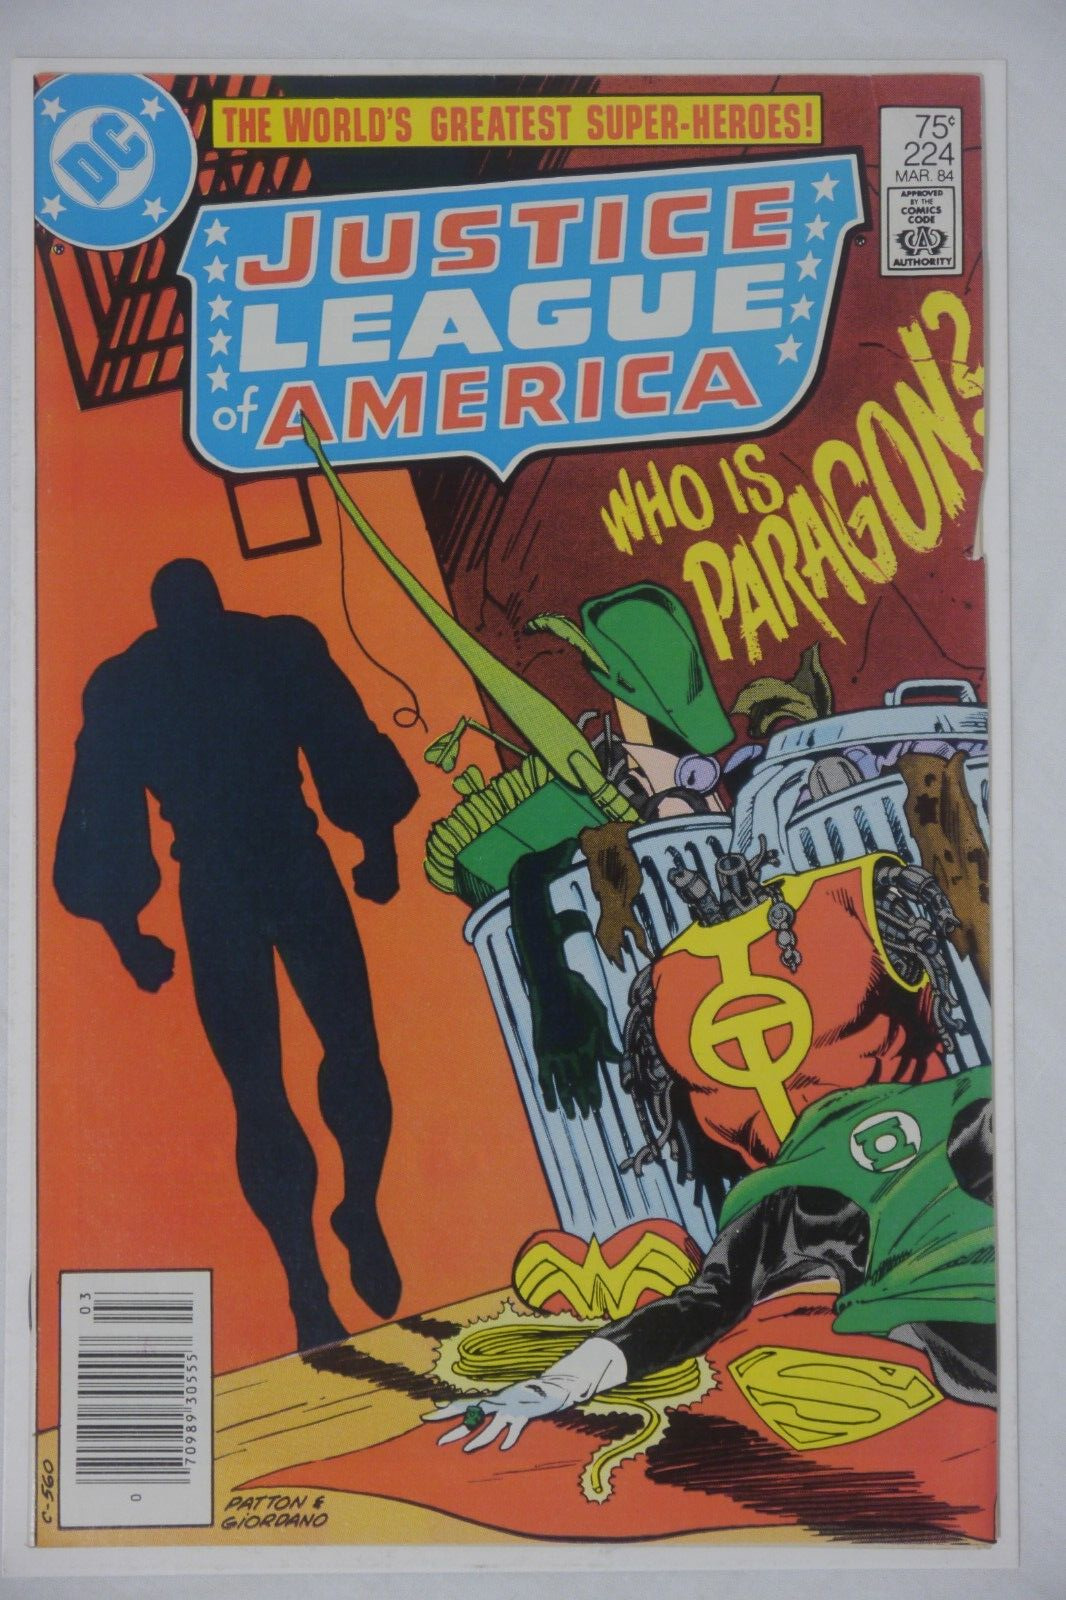 DC JUSTICE LEAGUE OF AMERICA #224 (1984) Paragon, Chuck Patton, Dick Giordano